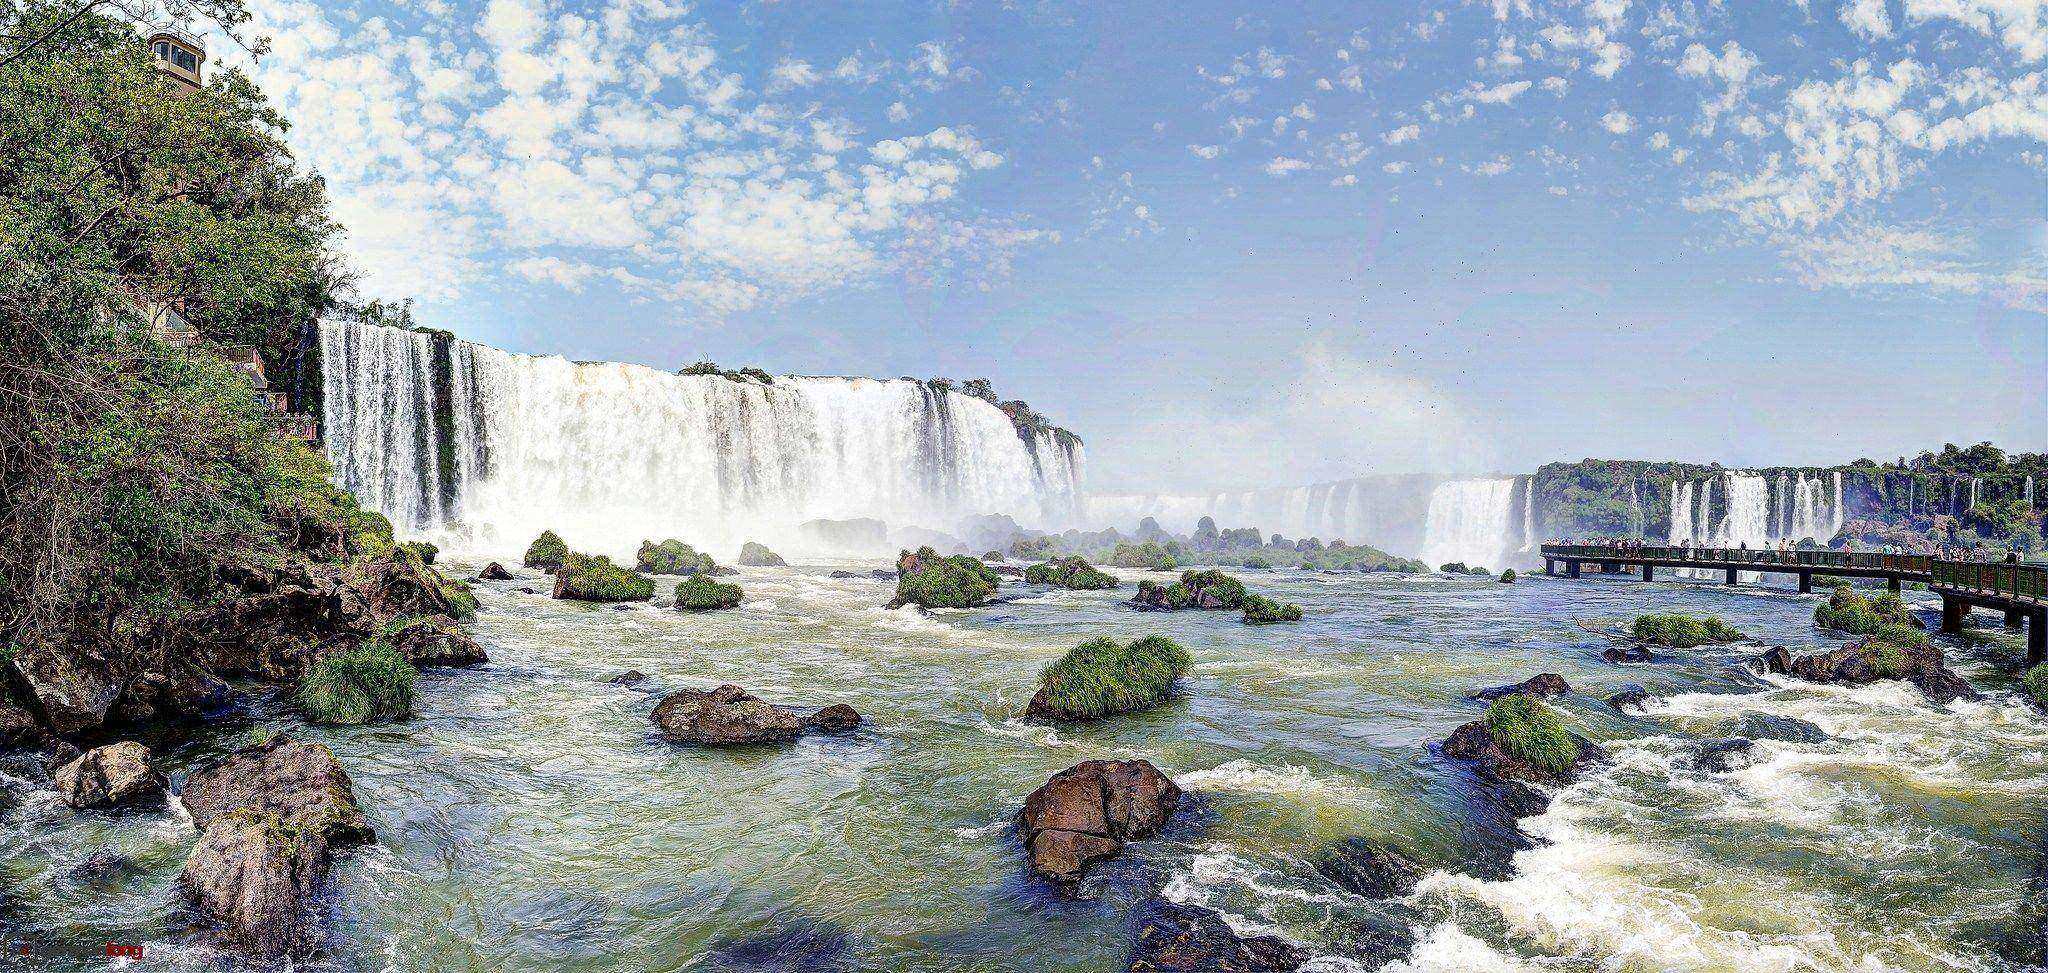 Iguazu - Cataratas Argentinas y Brasileras - 4 noches de alojamiento + Cataratas Argentinas + Cataratas Brasileras